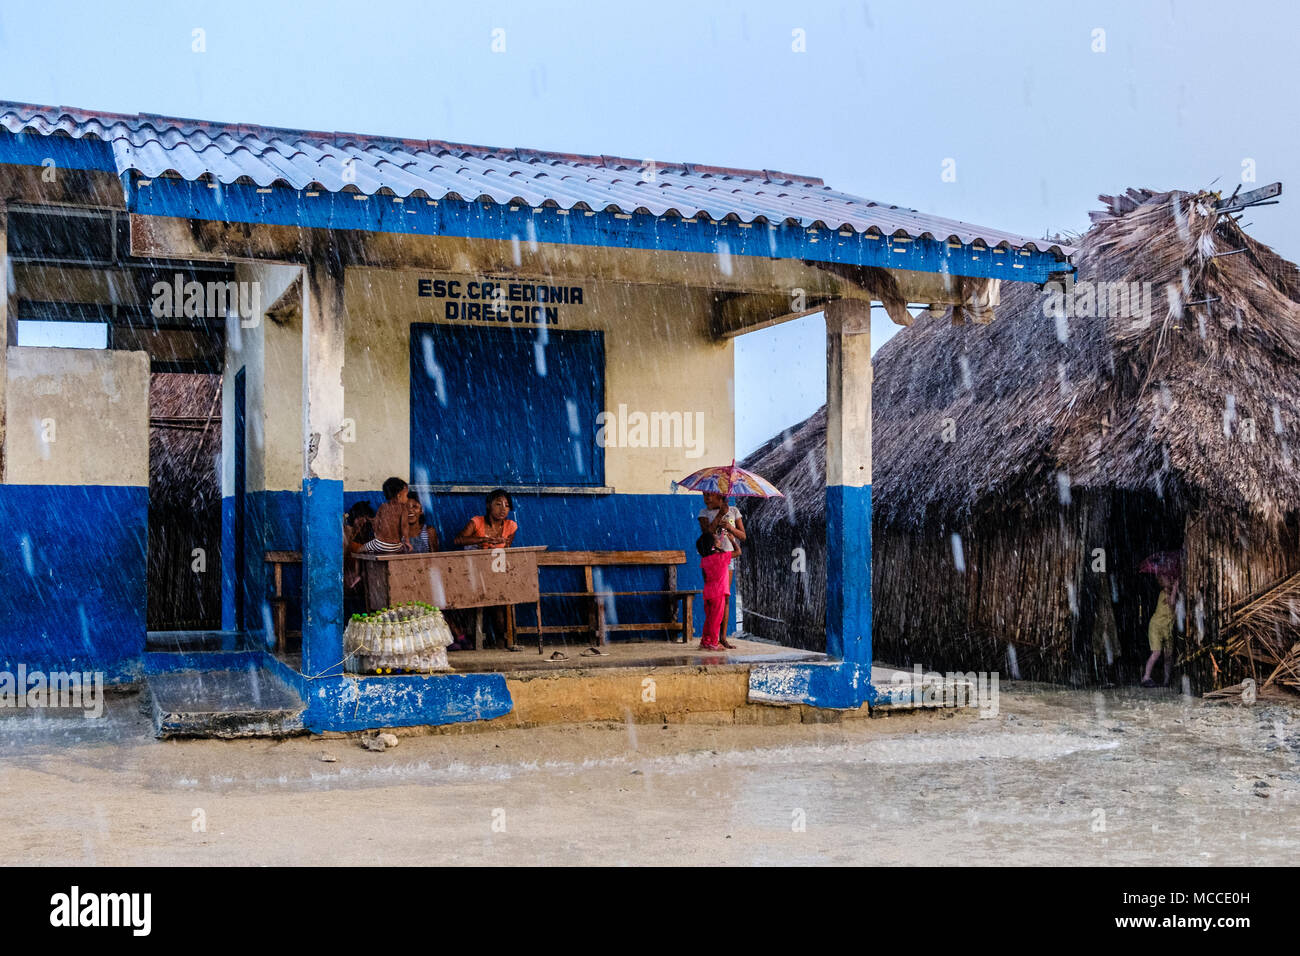 Guna Yala, Panama - march 2018: Group of young children with umbrella in rain on street in a Kuna Village Stock Photo